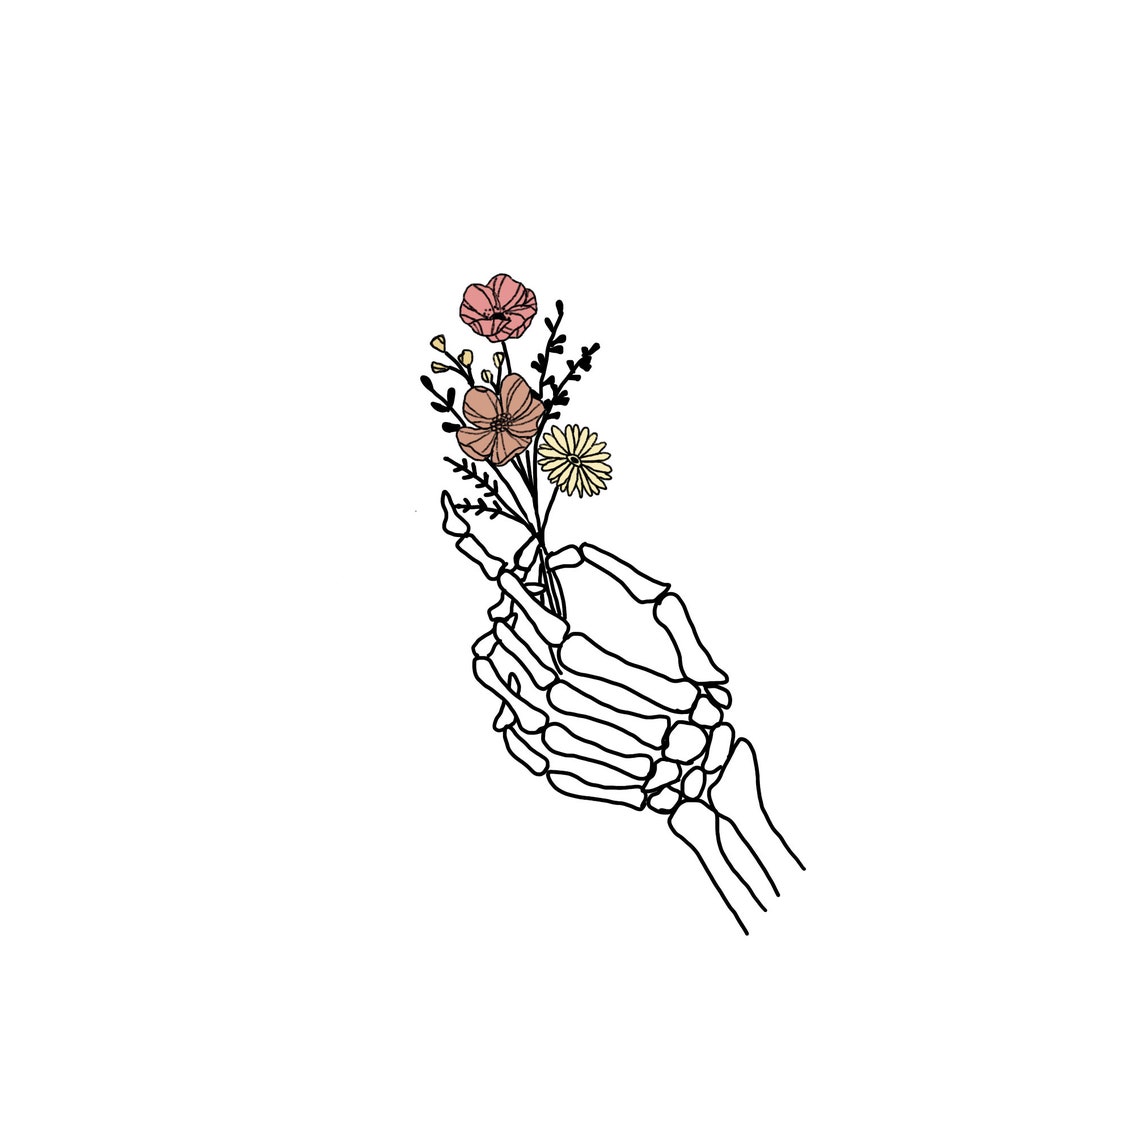 Skeleton Hand Holding Flowers PDF | Etsy